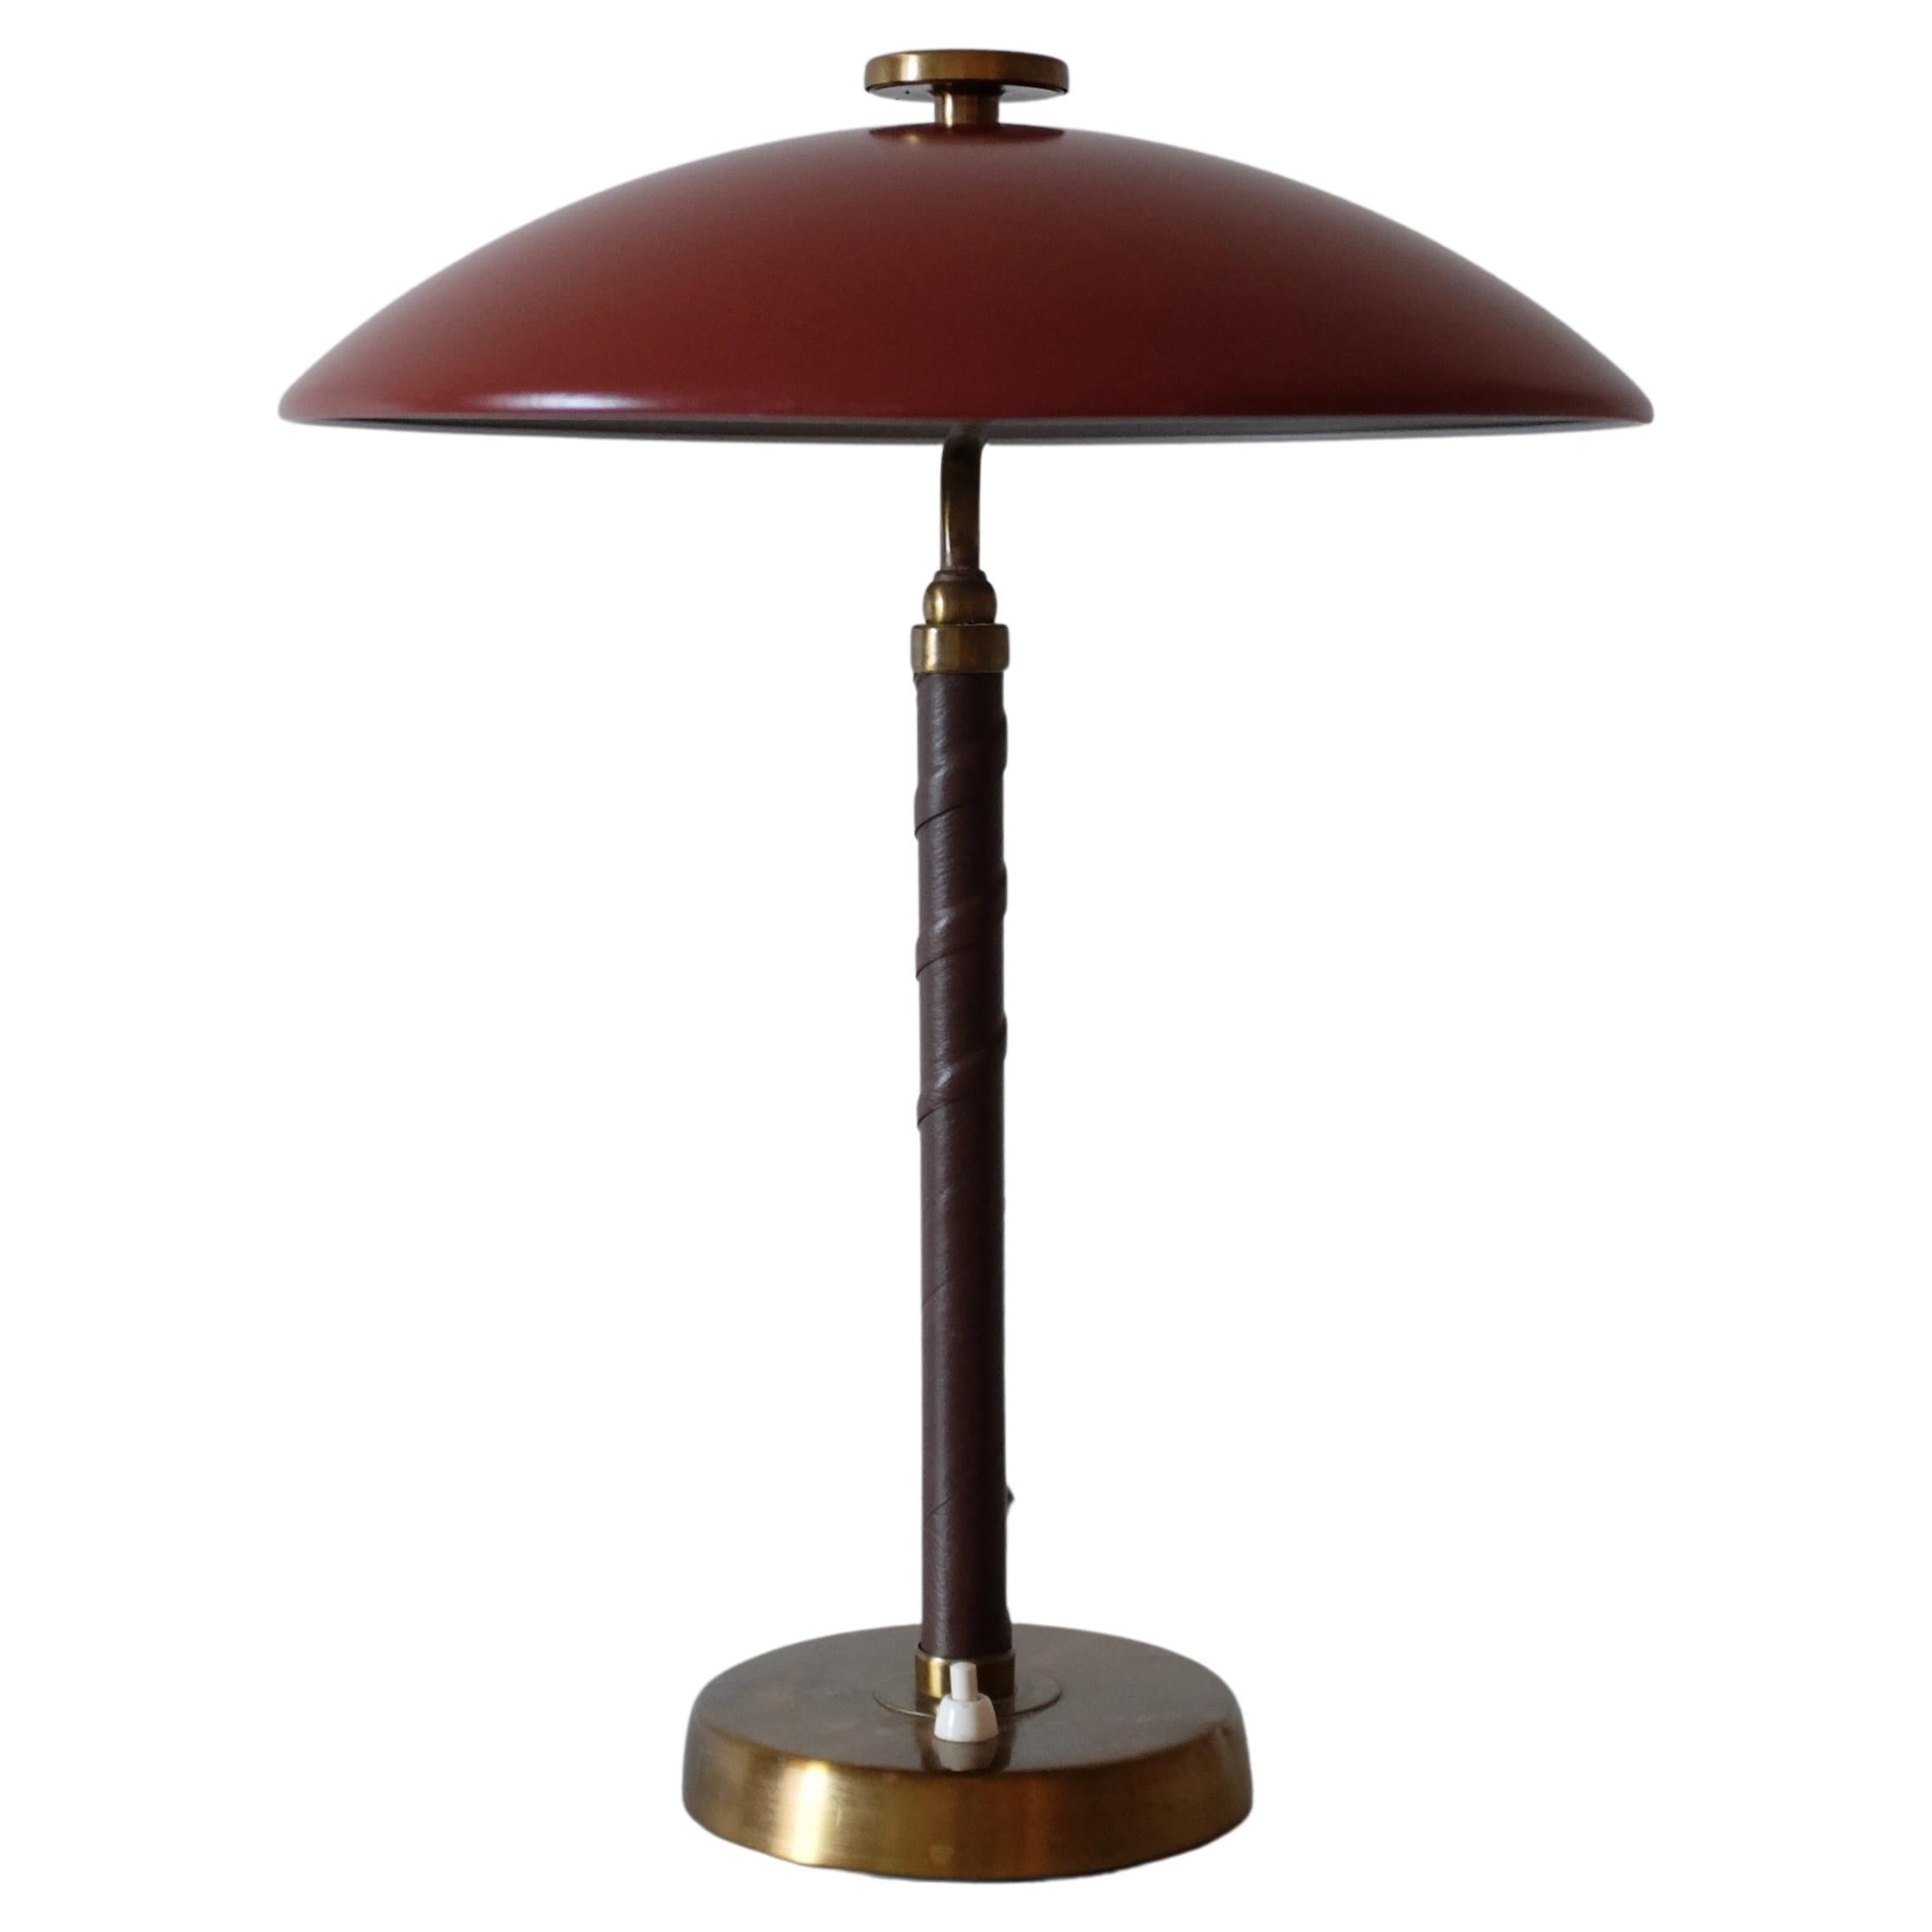 1940s Table Lamp by Einar Bäckström